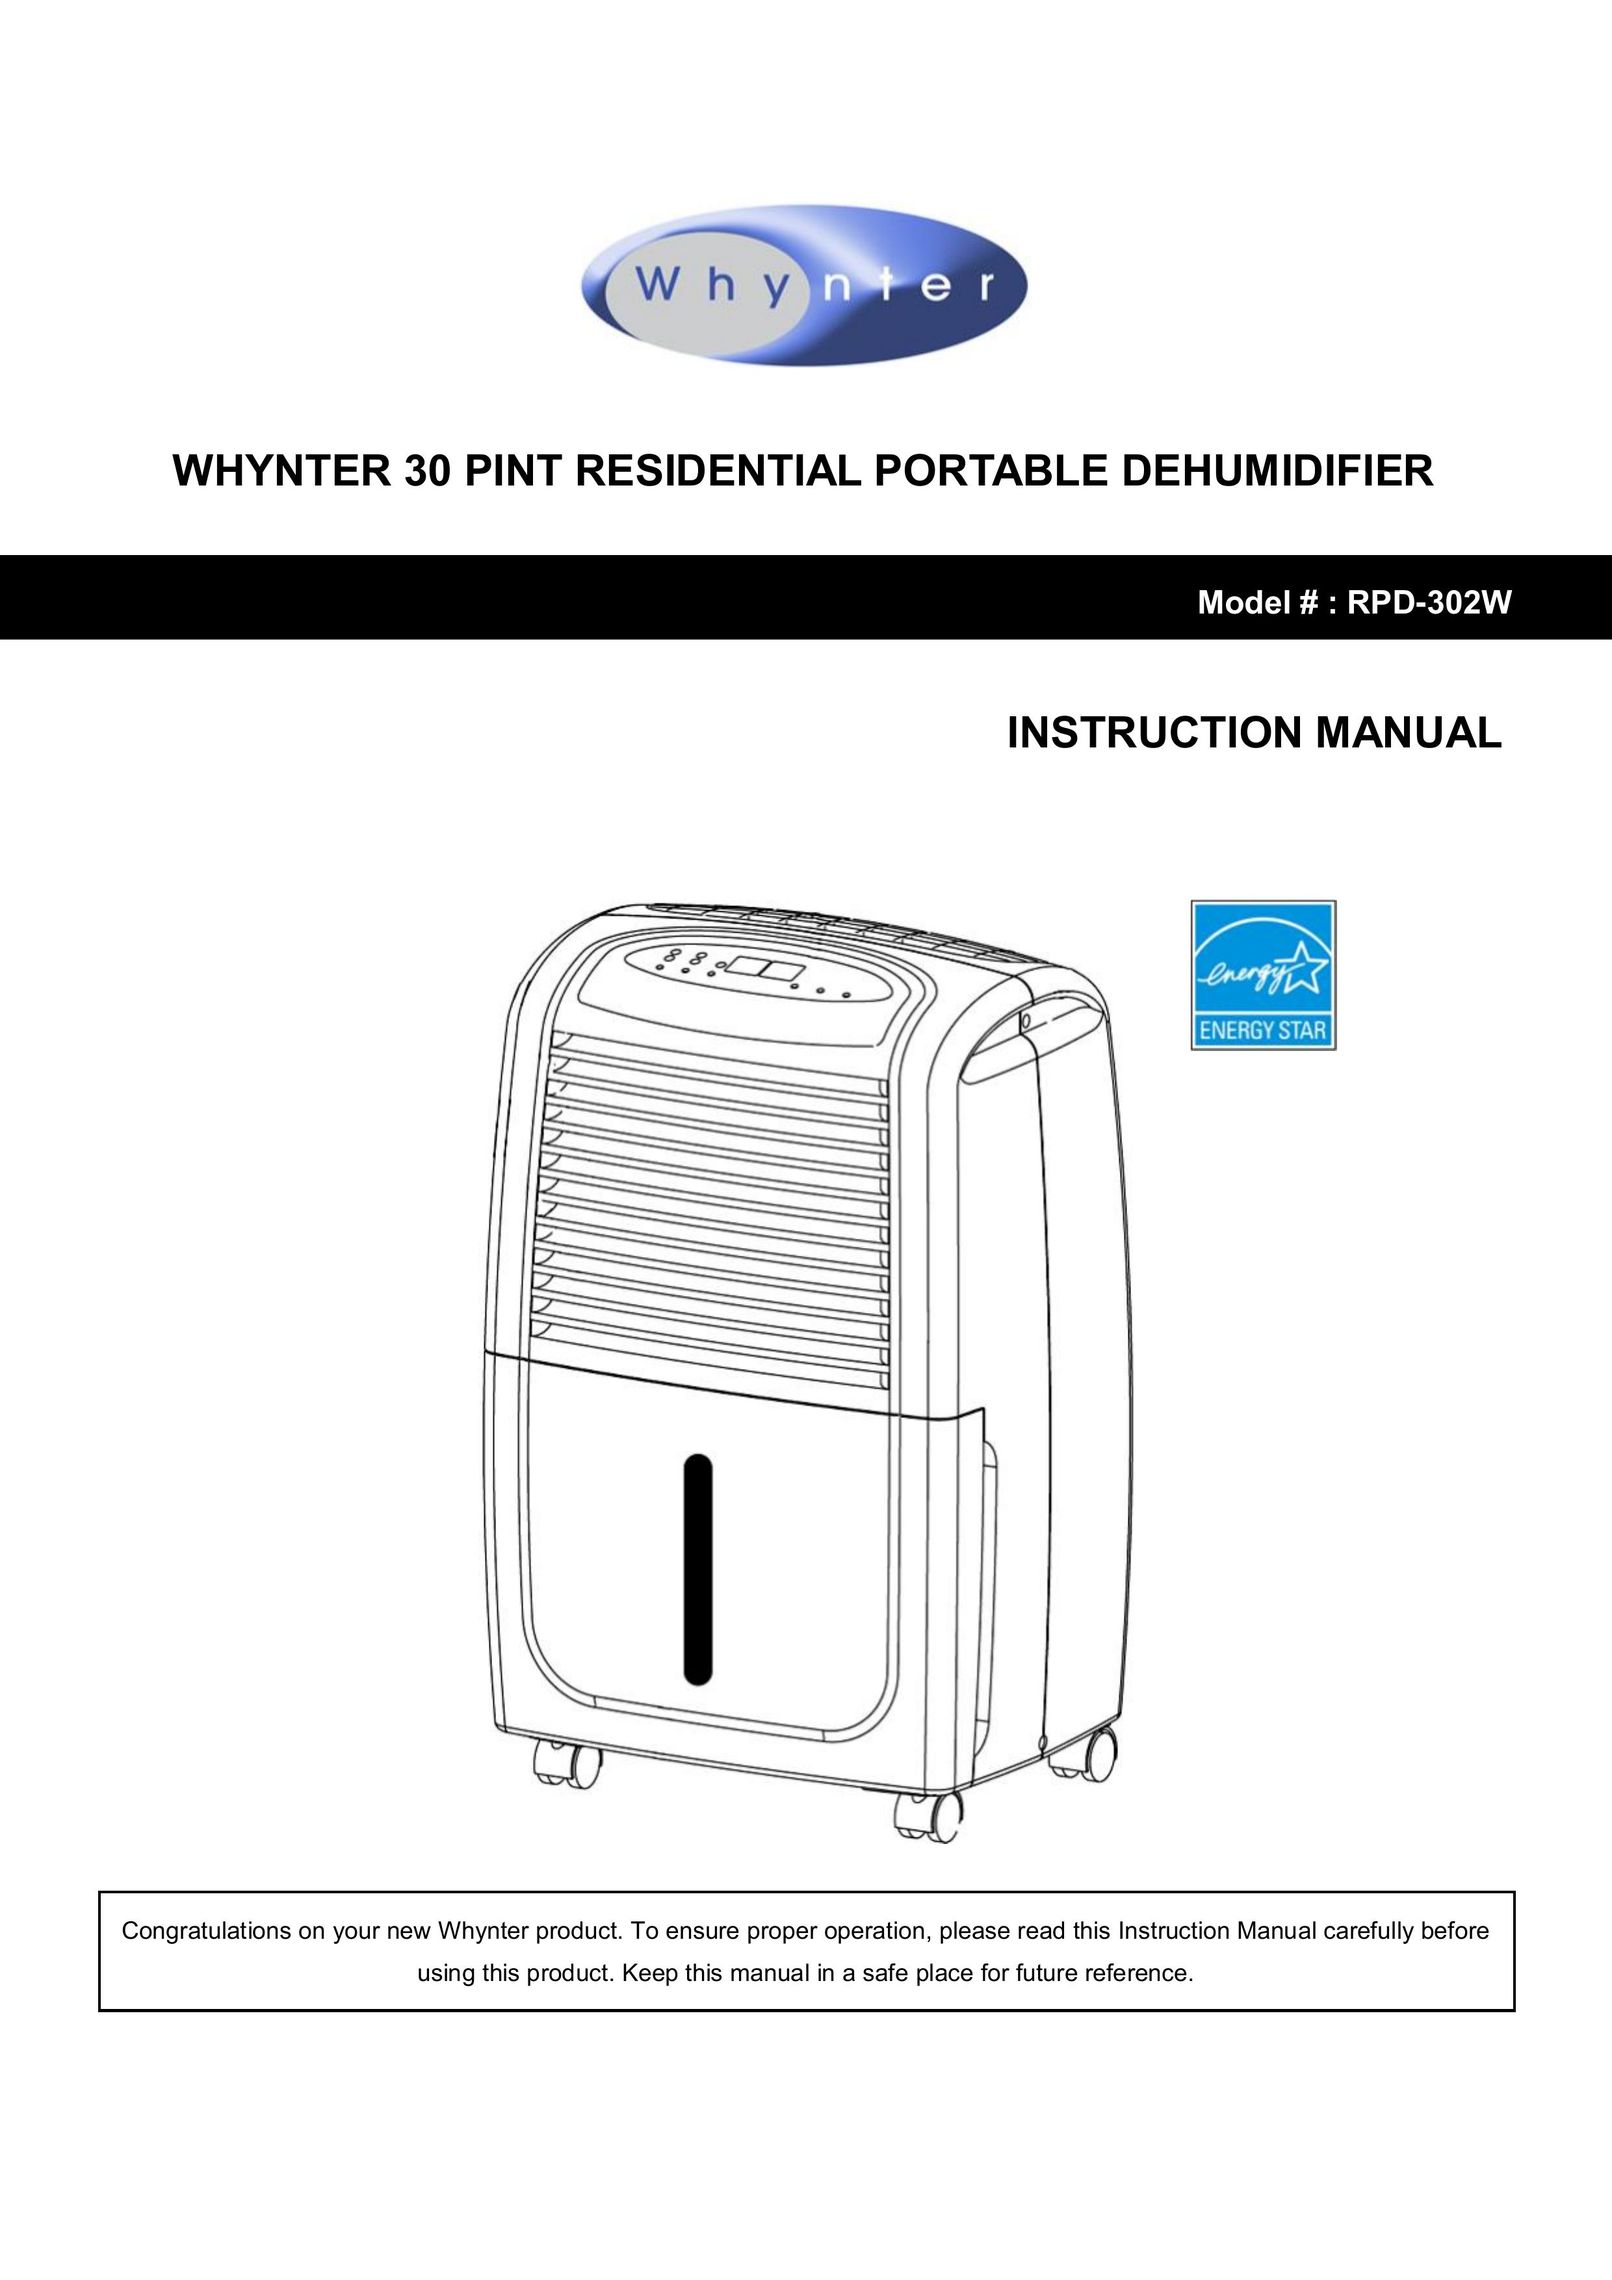 Whynter RPD-302W Dehumidifier User Manual